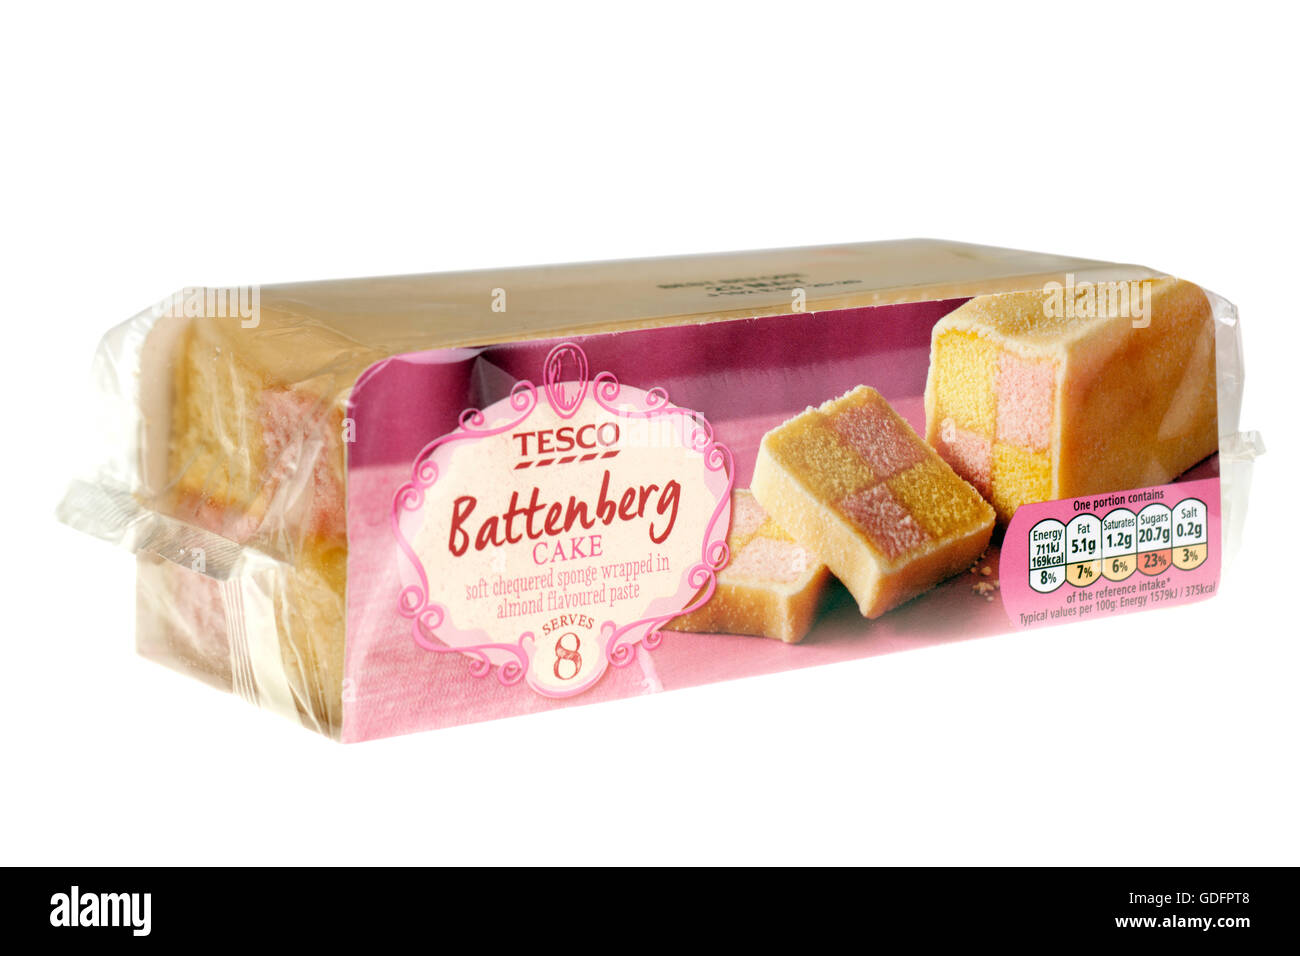 Tesco Battenberg cake Stock Photo